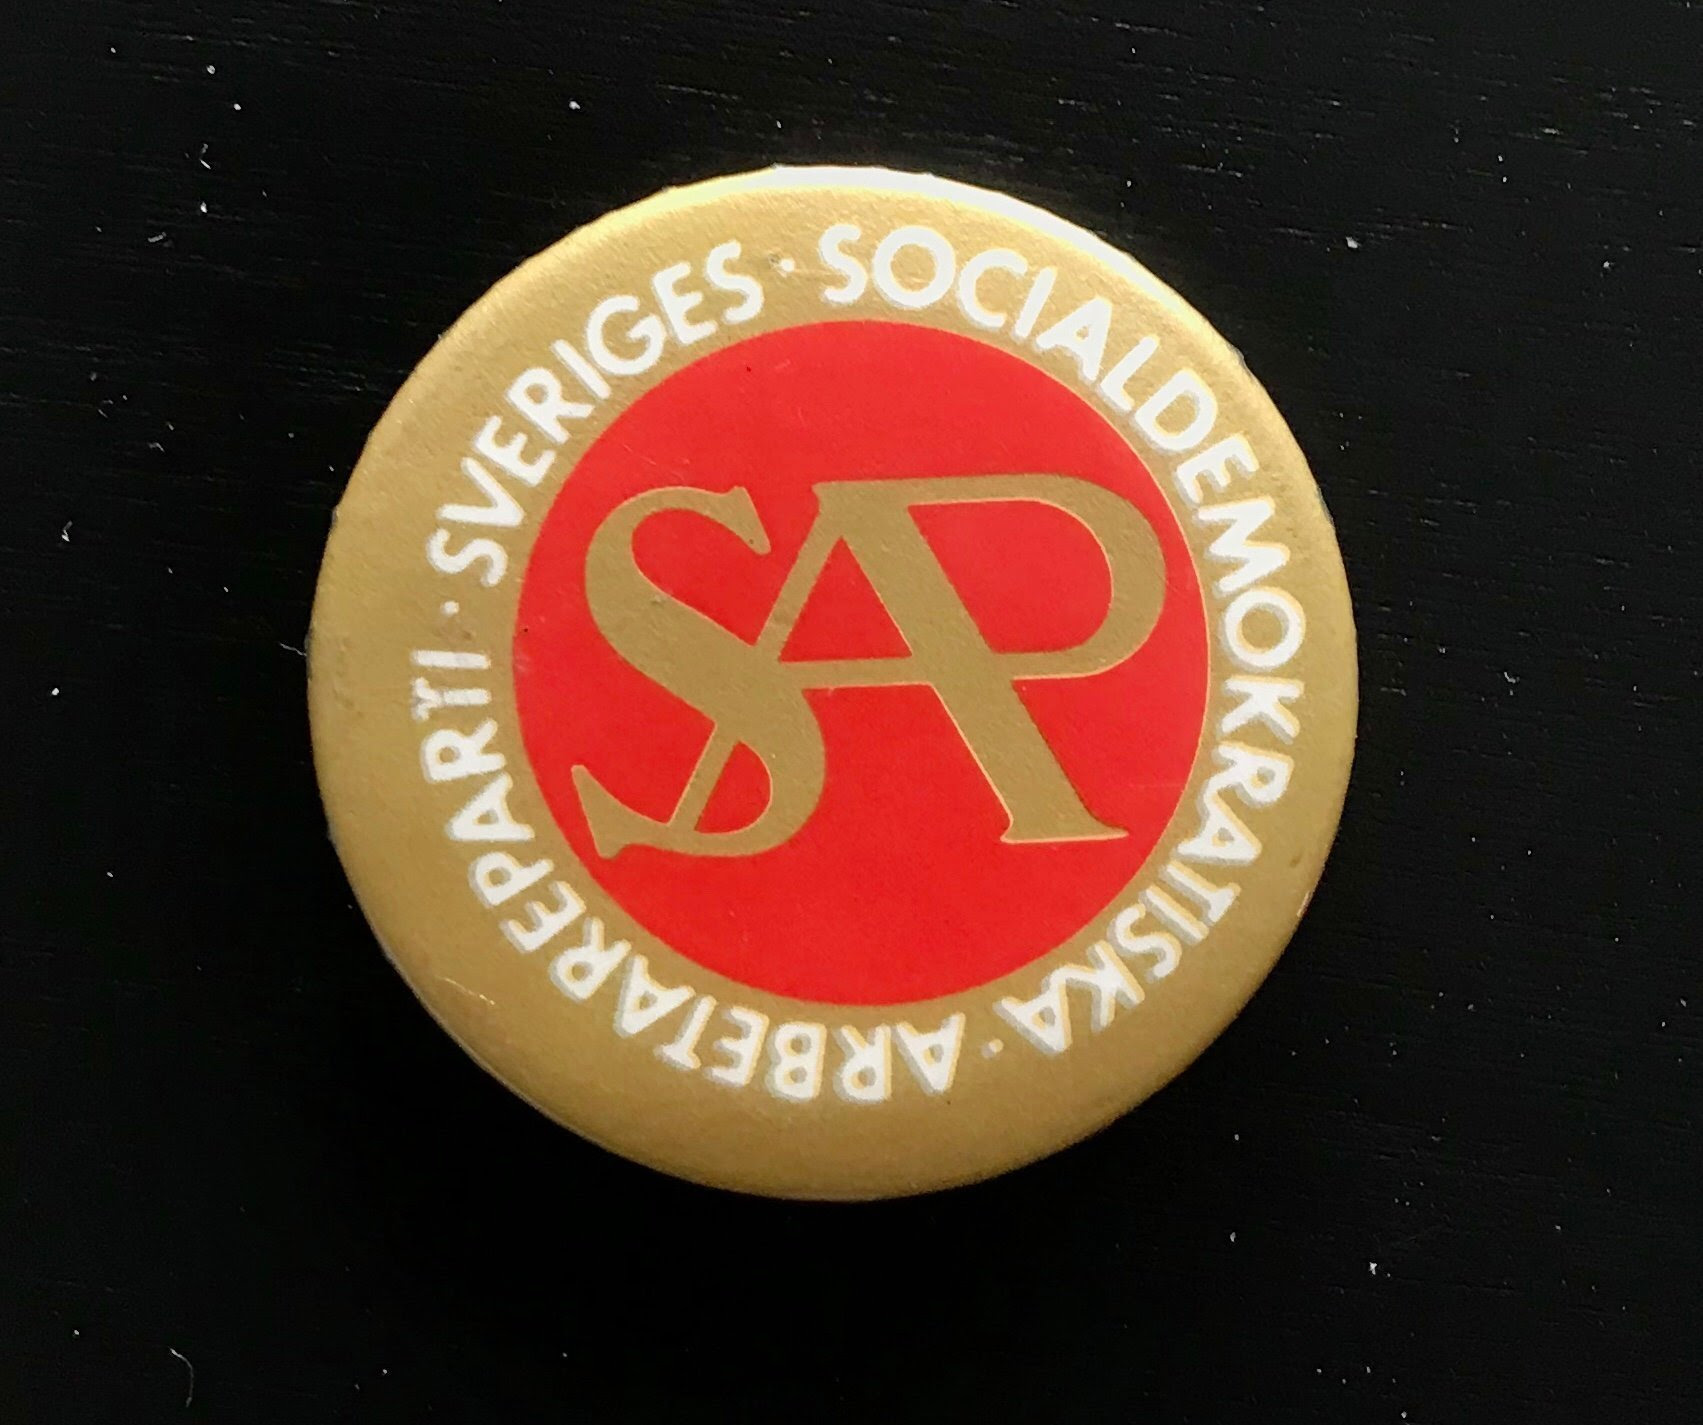 Socialdemokraterna torsdag 22 april 2021. Badge S A P Socialdemokraterna 438966437 áˆ Kop Pa Tradera